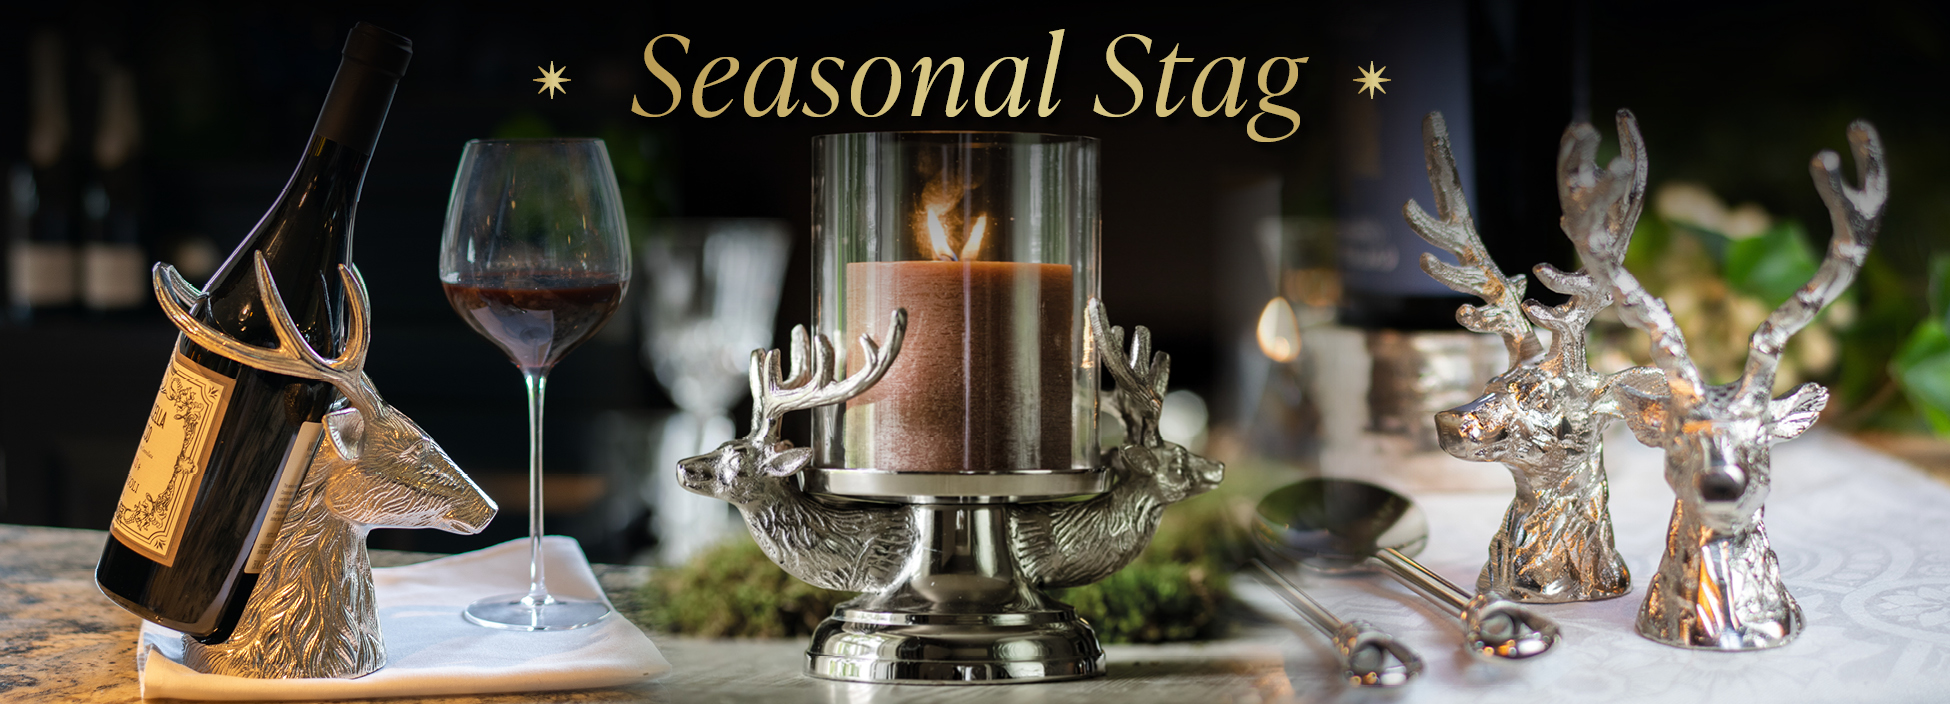 Seasonal Stag Collection 